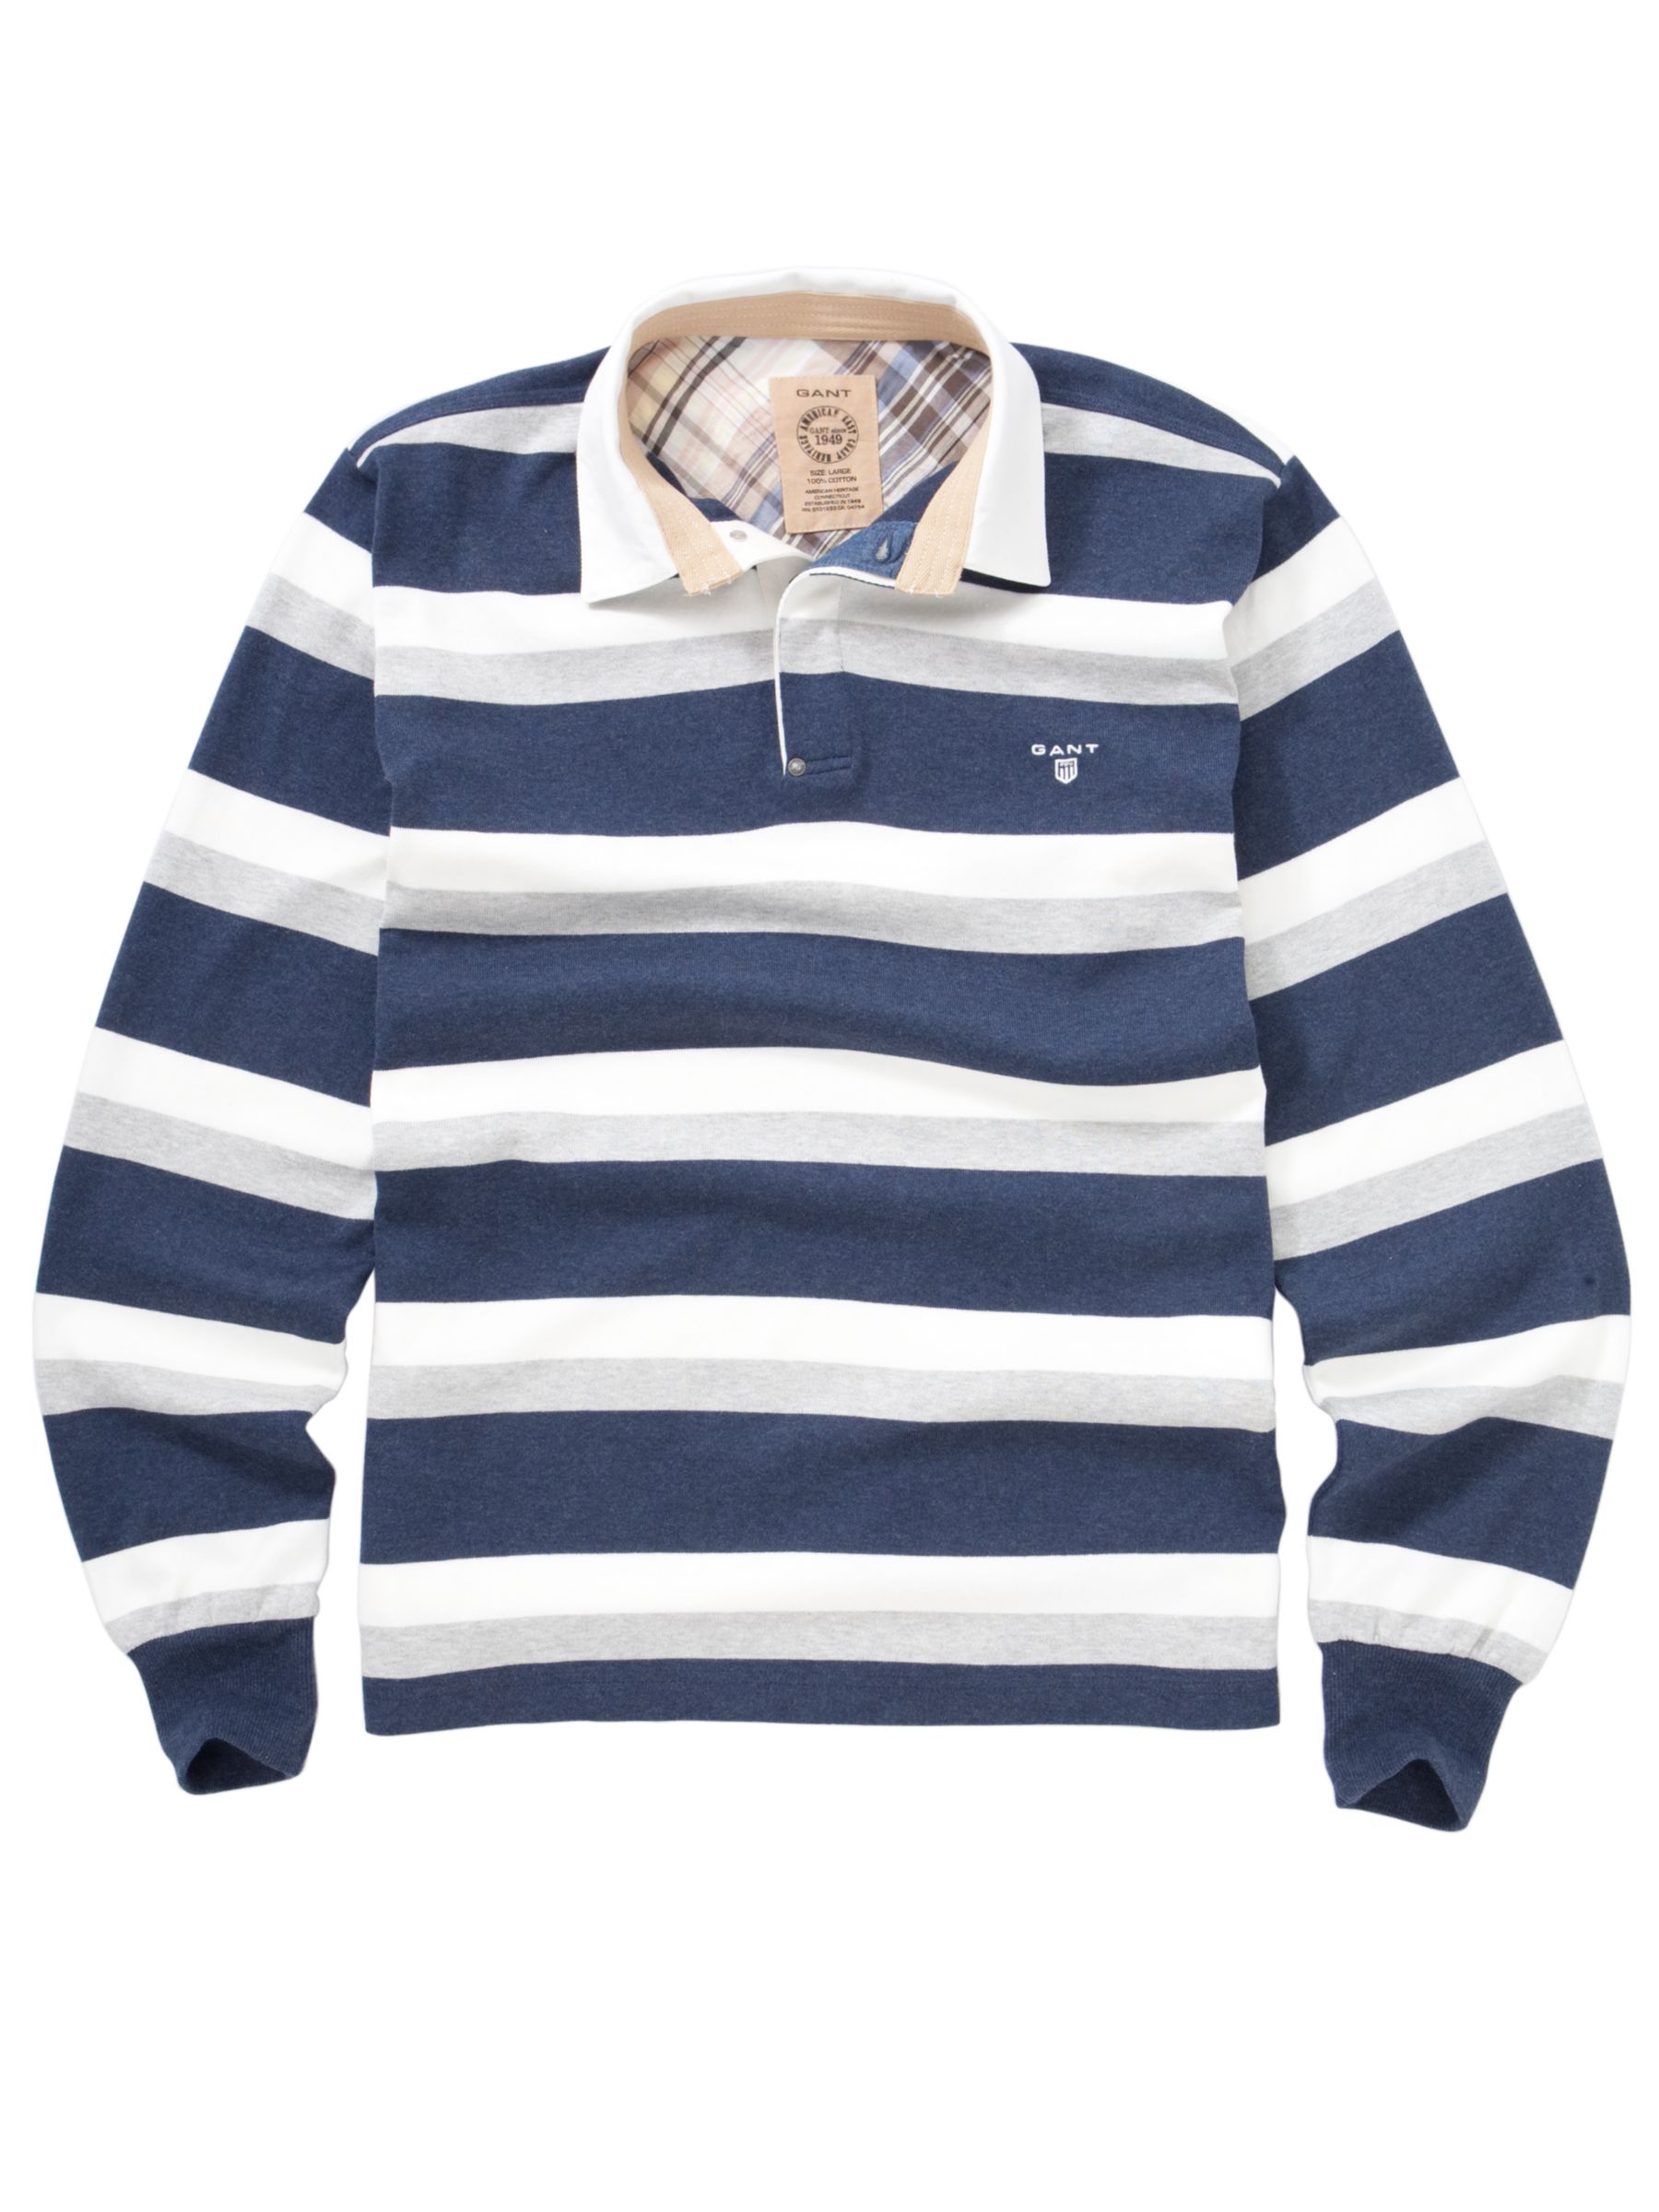 Gant Sunset Breton Stripe Rugby Shirt,